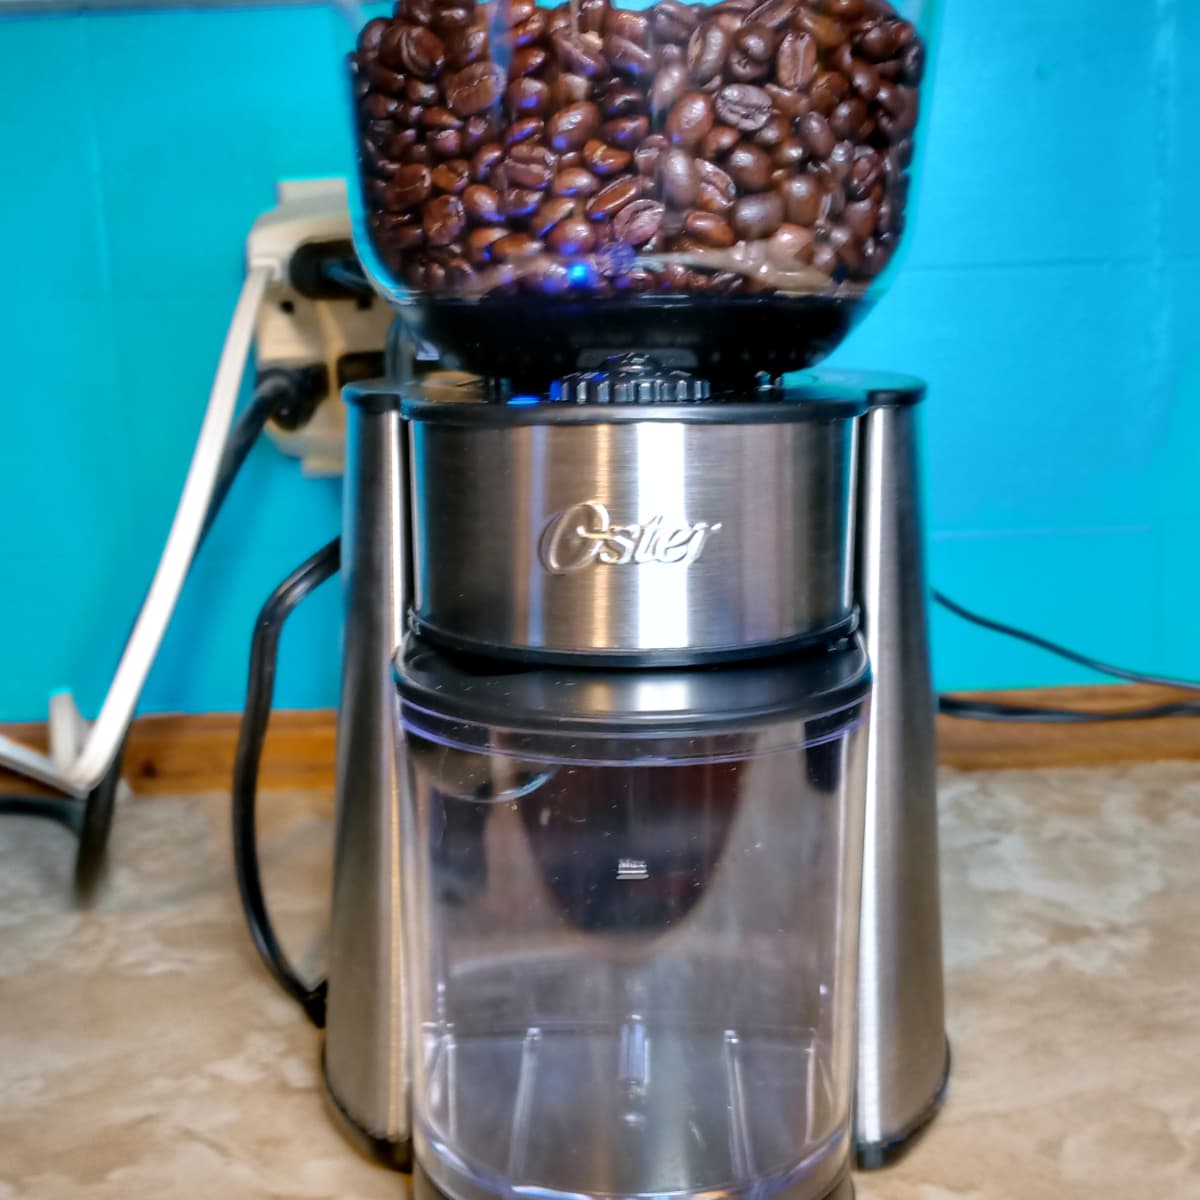 Cyetus Electric Coffee Bean Grinder